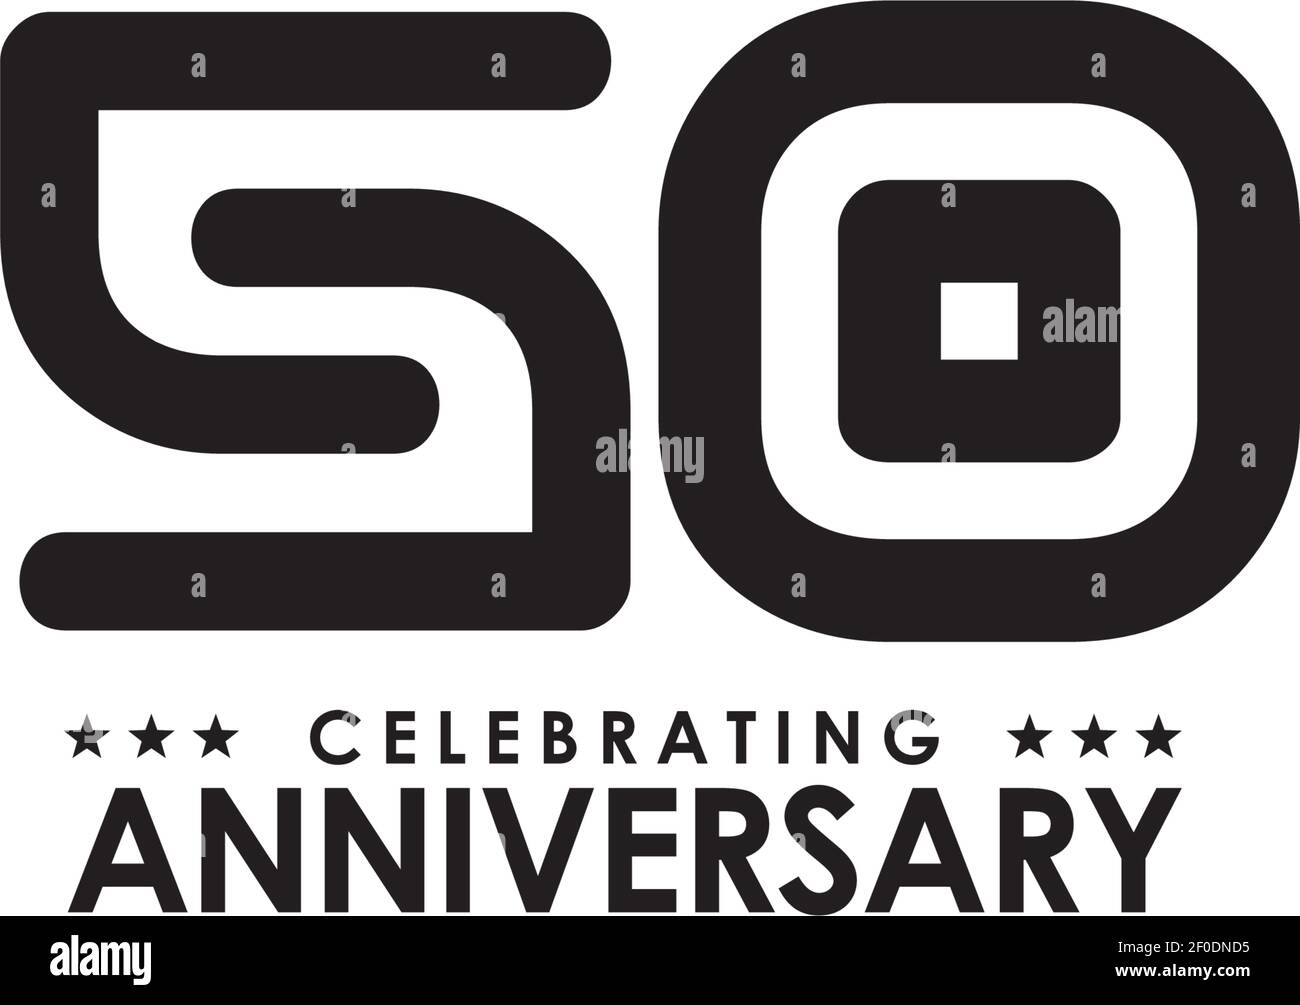 50th year celebrating anniversary emblem logo design vector template ...